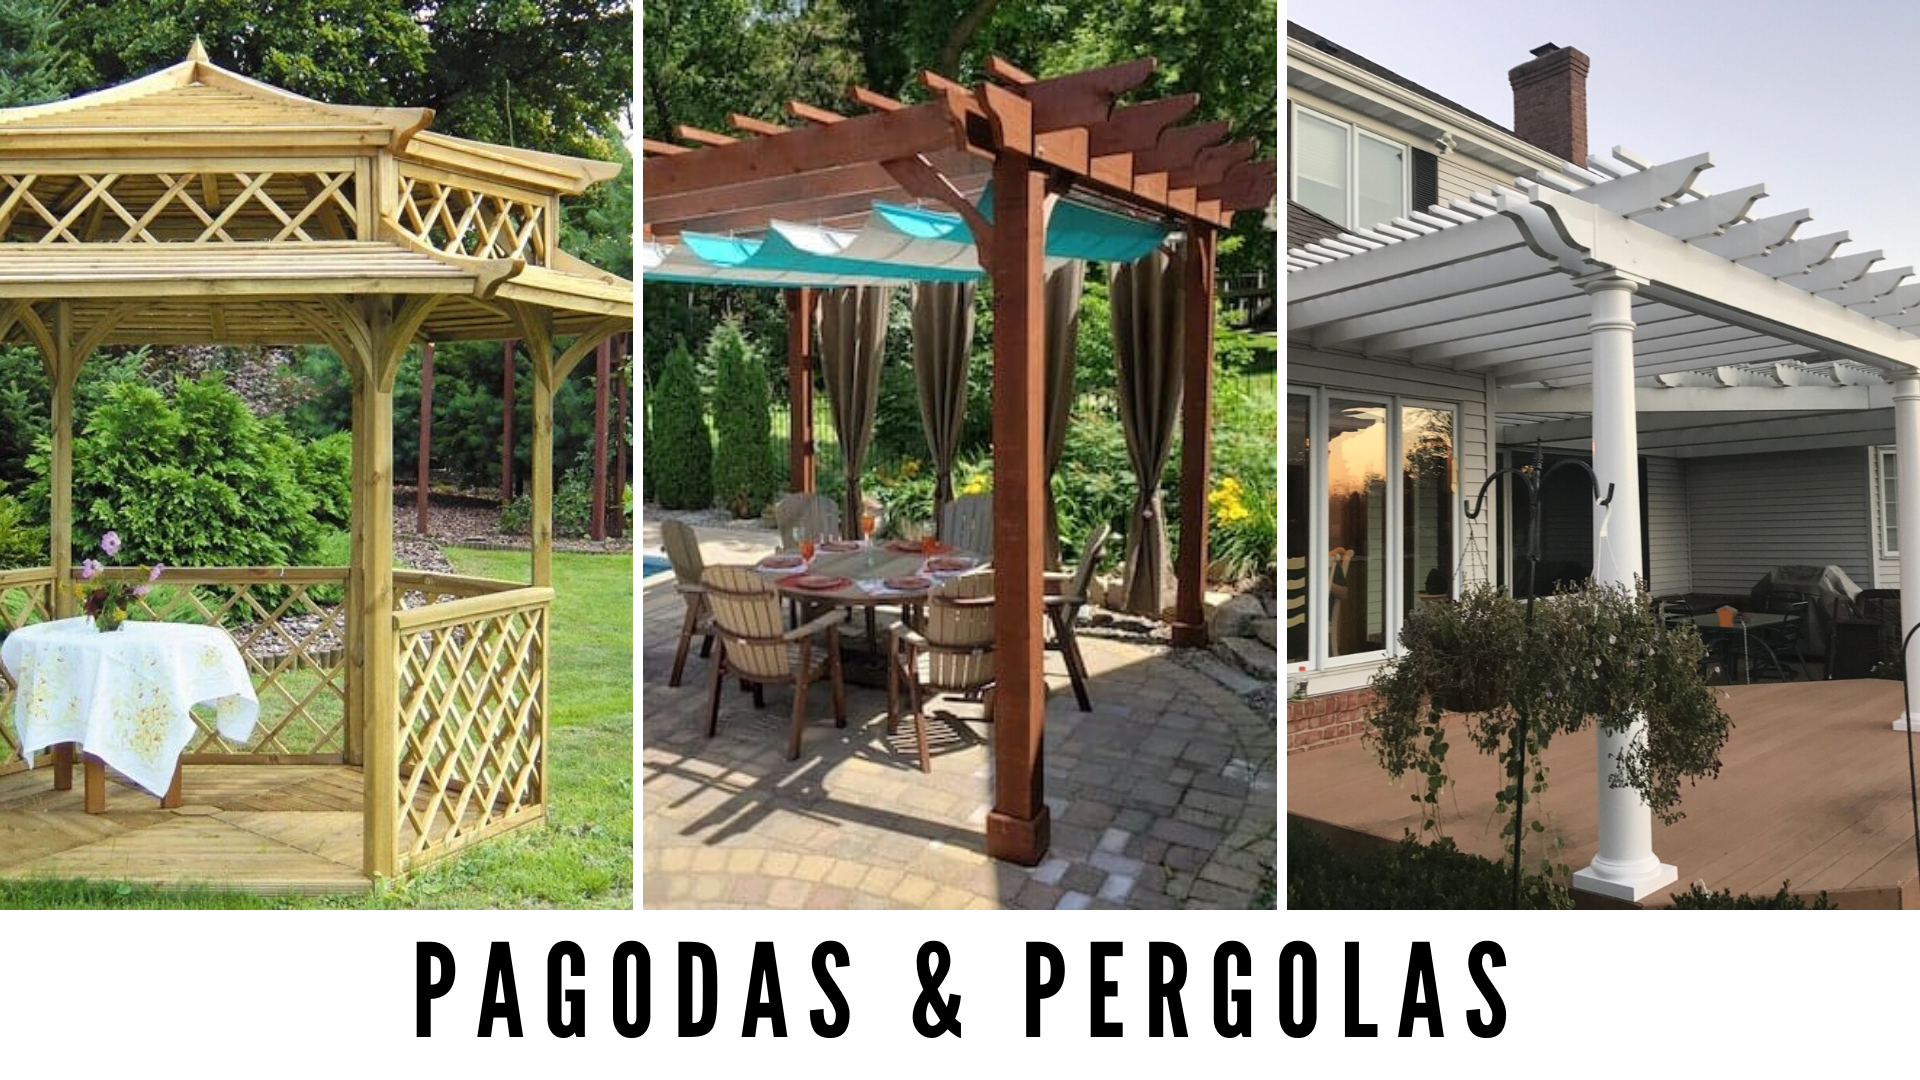 pagoda|pergola|deck|porch|garden|trellis|madison|build|style|decks|fence|wisconsin